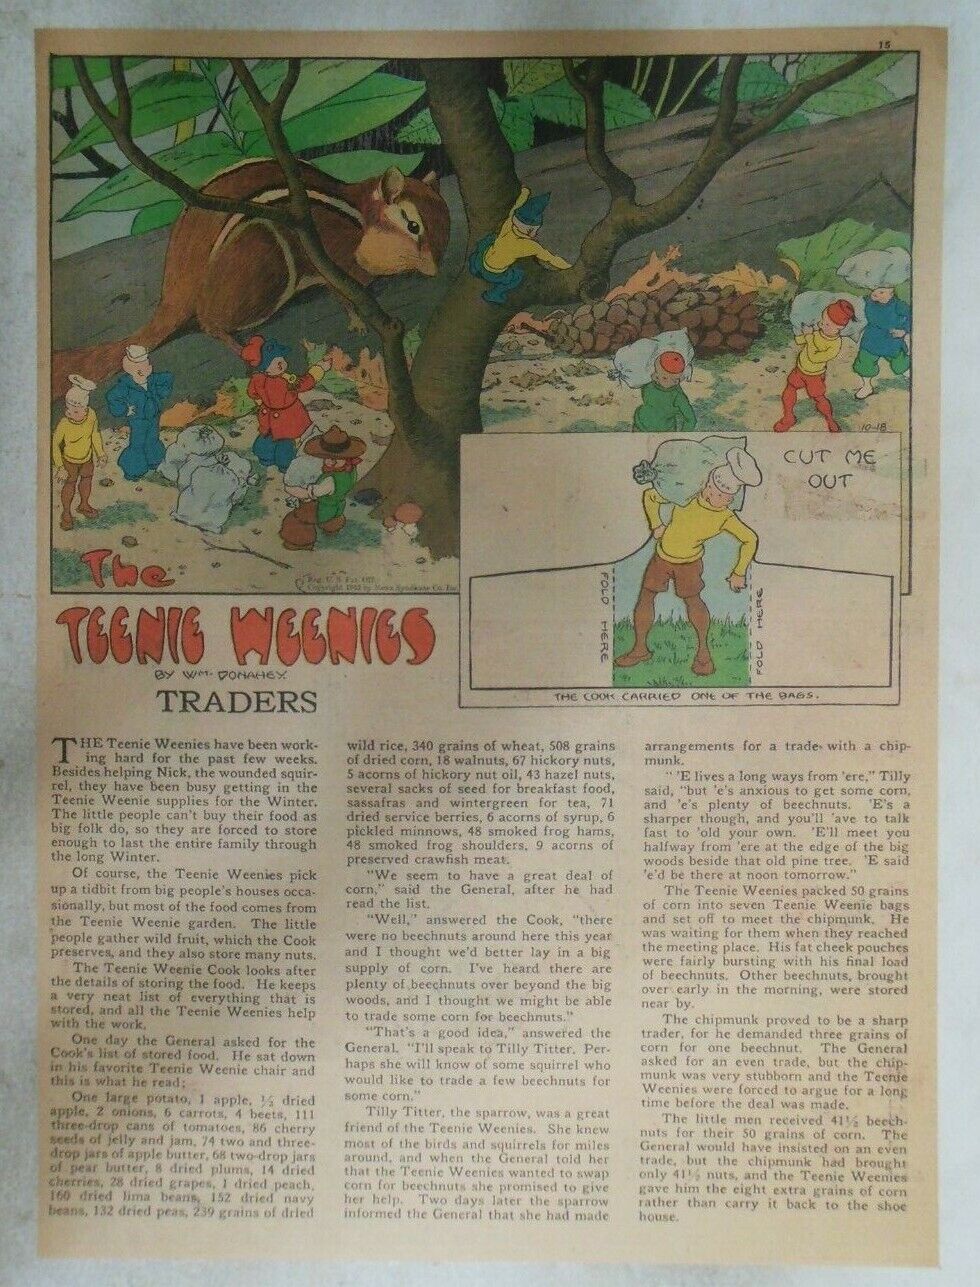 The Teenie Weenies Sunday by Wm. Donahey from 10/18/1942 Size: 11 x15 inches